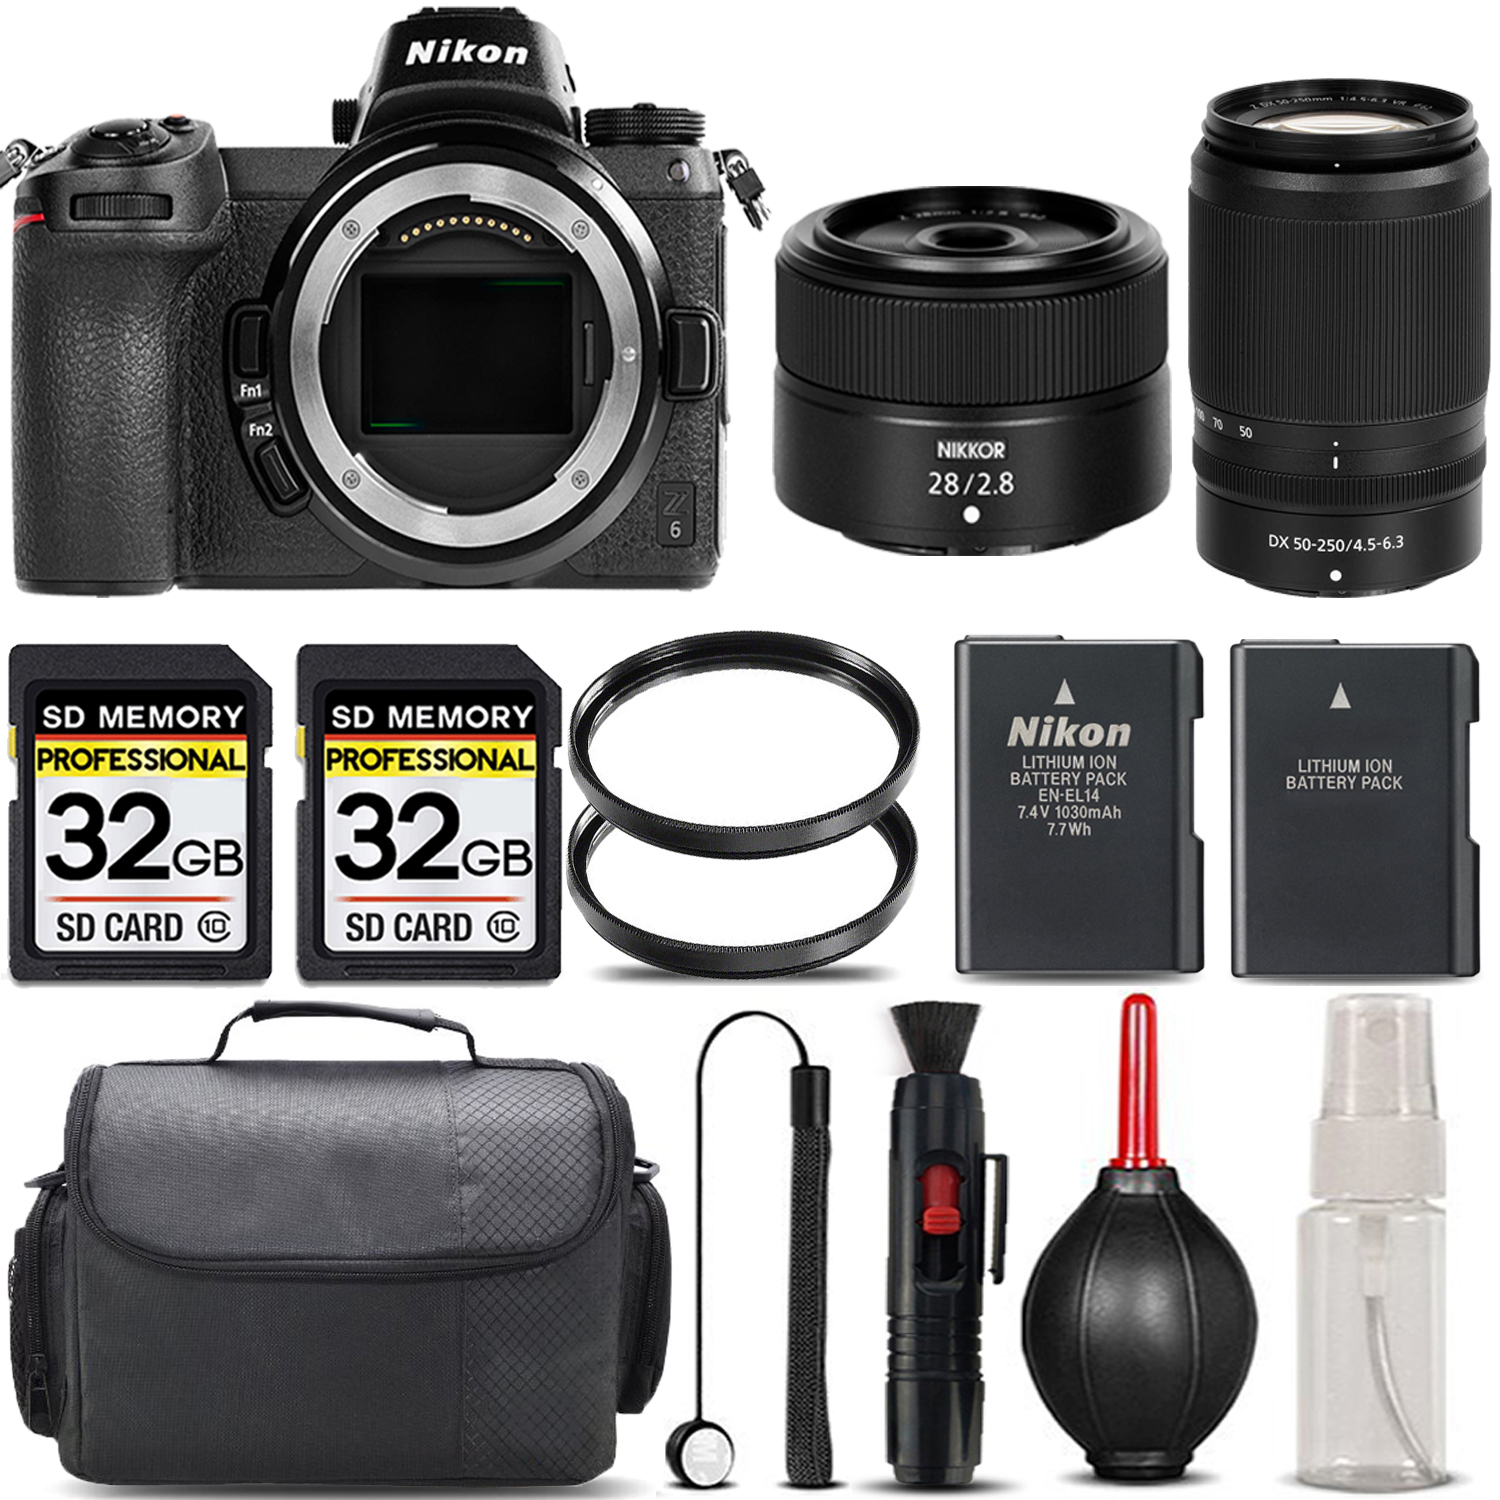 Z6 + 50-250mm f/4.5-6.3 Lens + 28mm f/2.8 Lens + Handbag - SAVE BIG KIT *FREE SHIPPING*